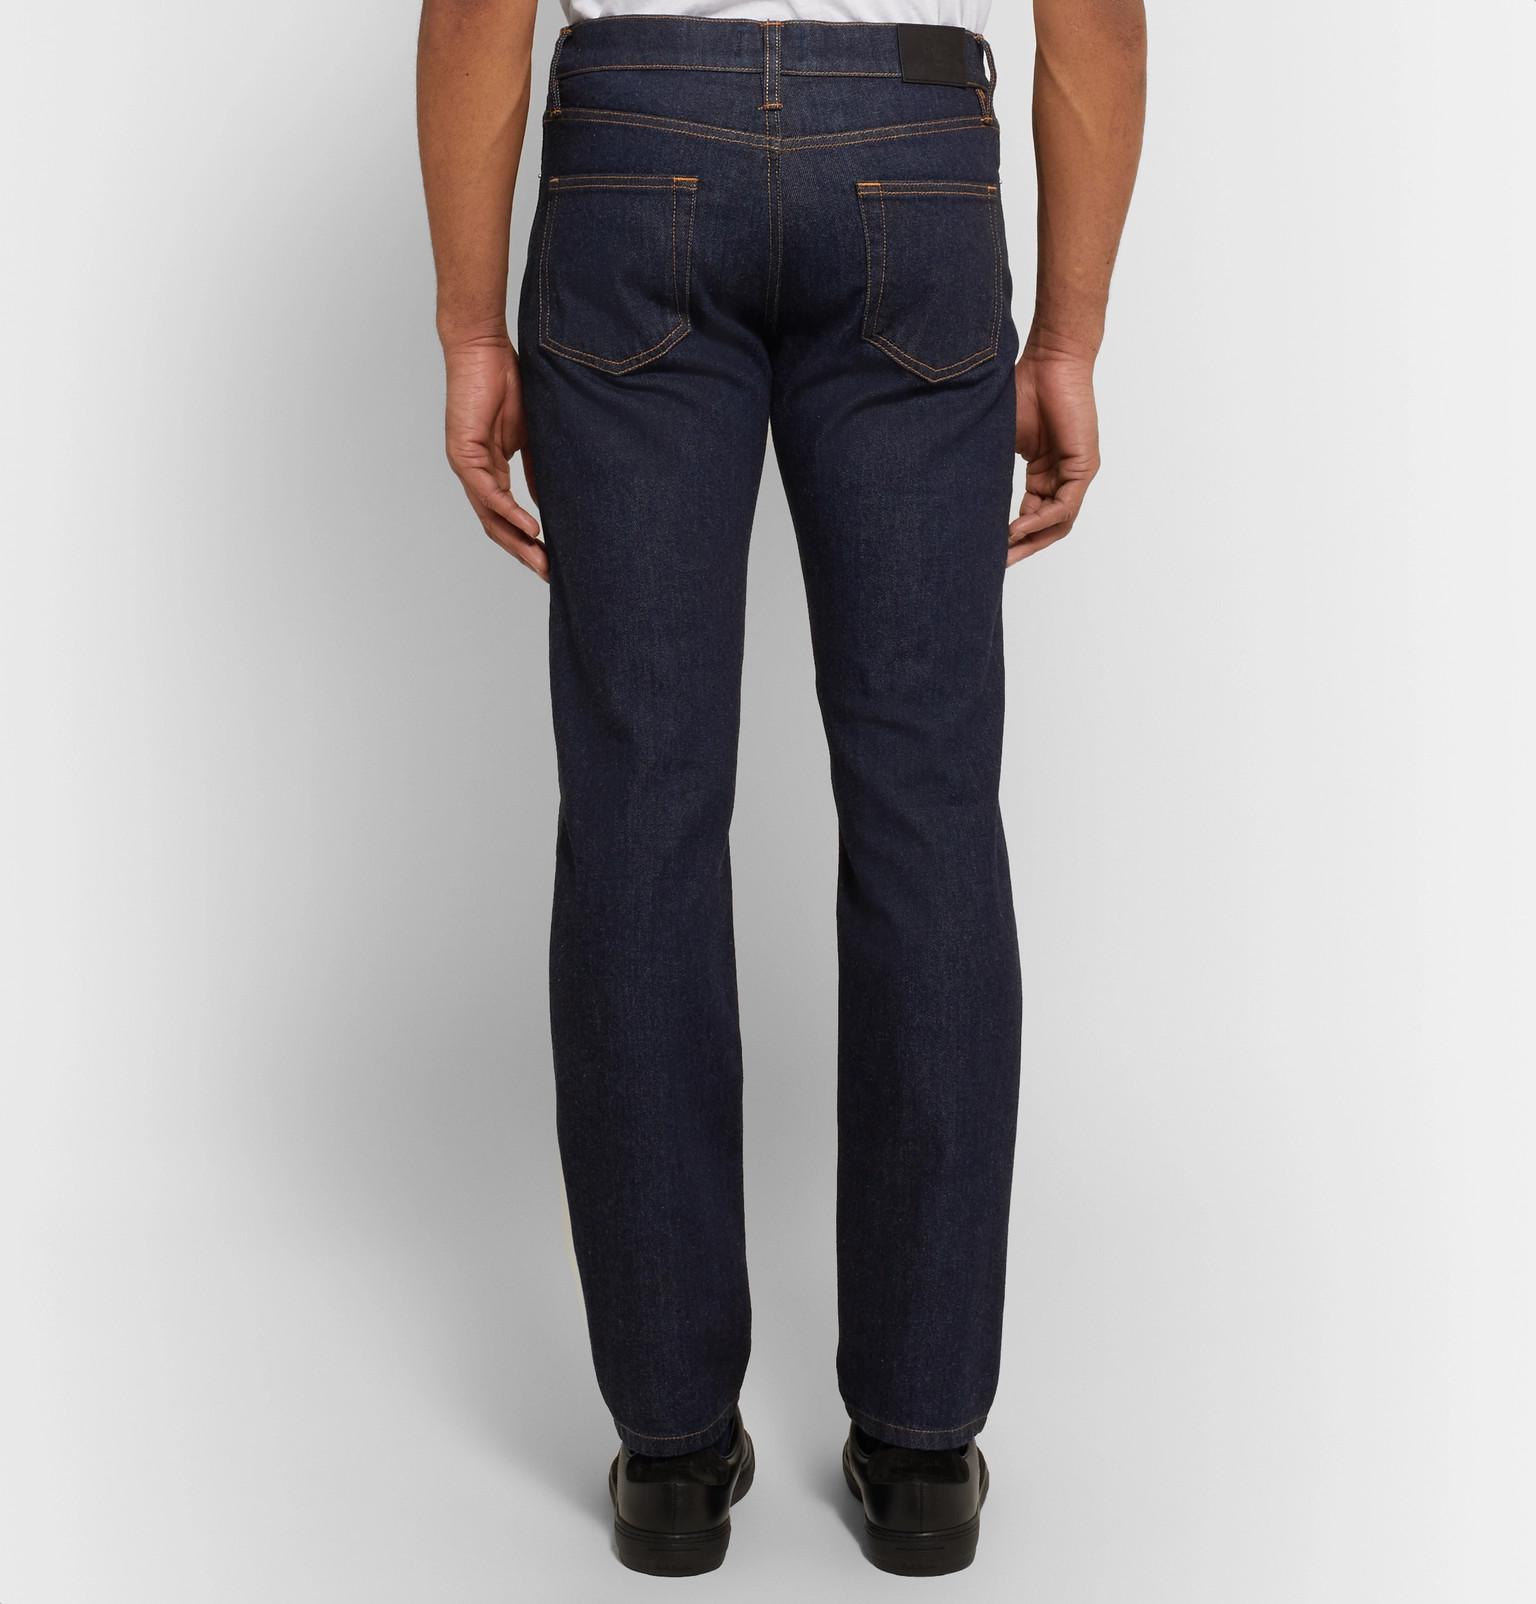 Dunhill Slim-fit Denim Jeans in Dark Denim (Blue) for Men - Lyst